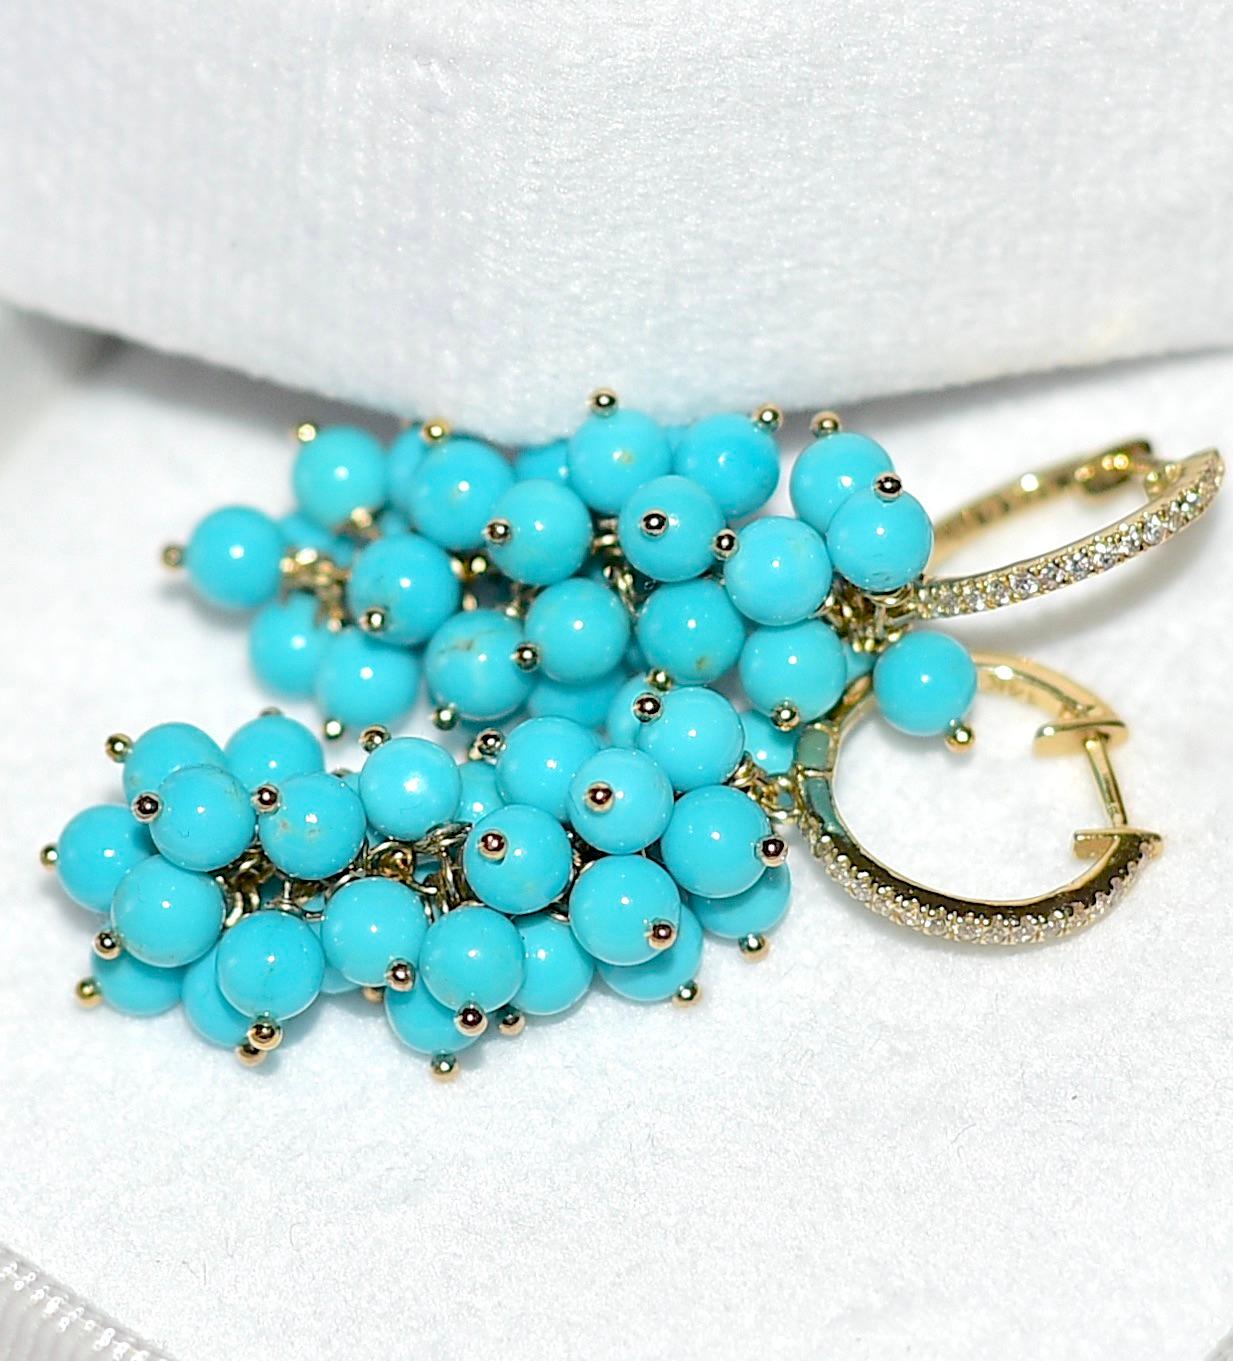 Sleeping Beauty Turquoise Earrings in 14K Solid Yellow Gold, Diamonds 2